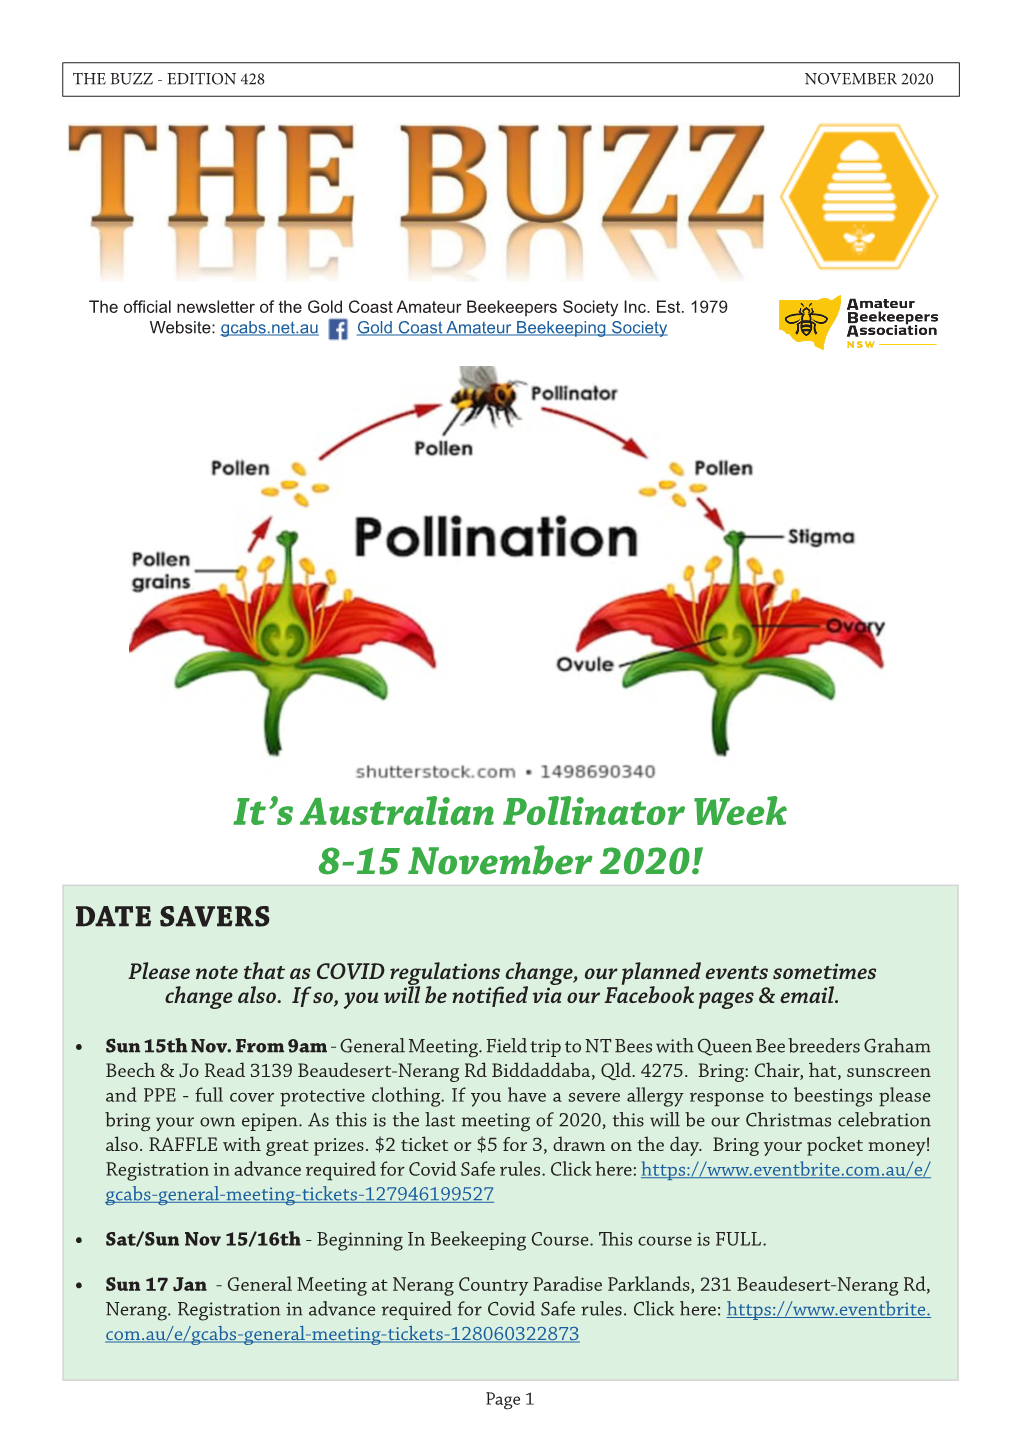 It's Australian Pollinator Week 8-15 November 2020!